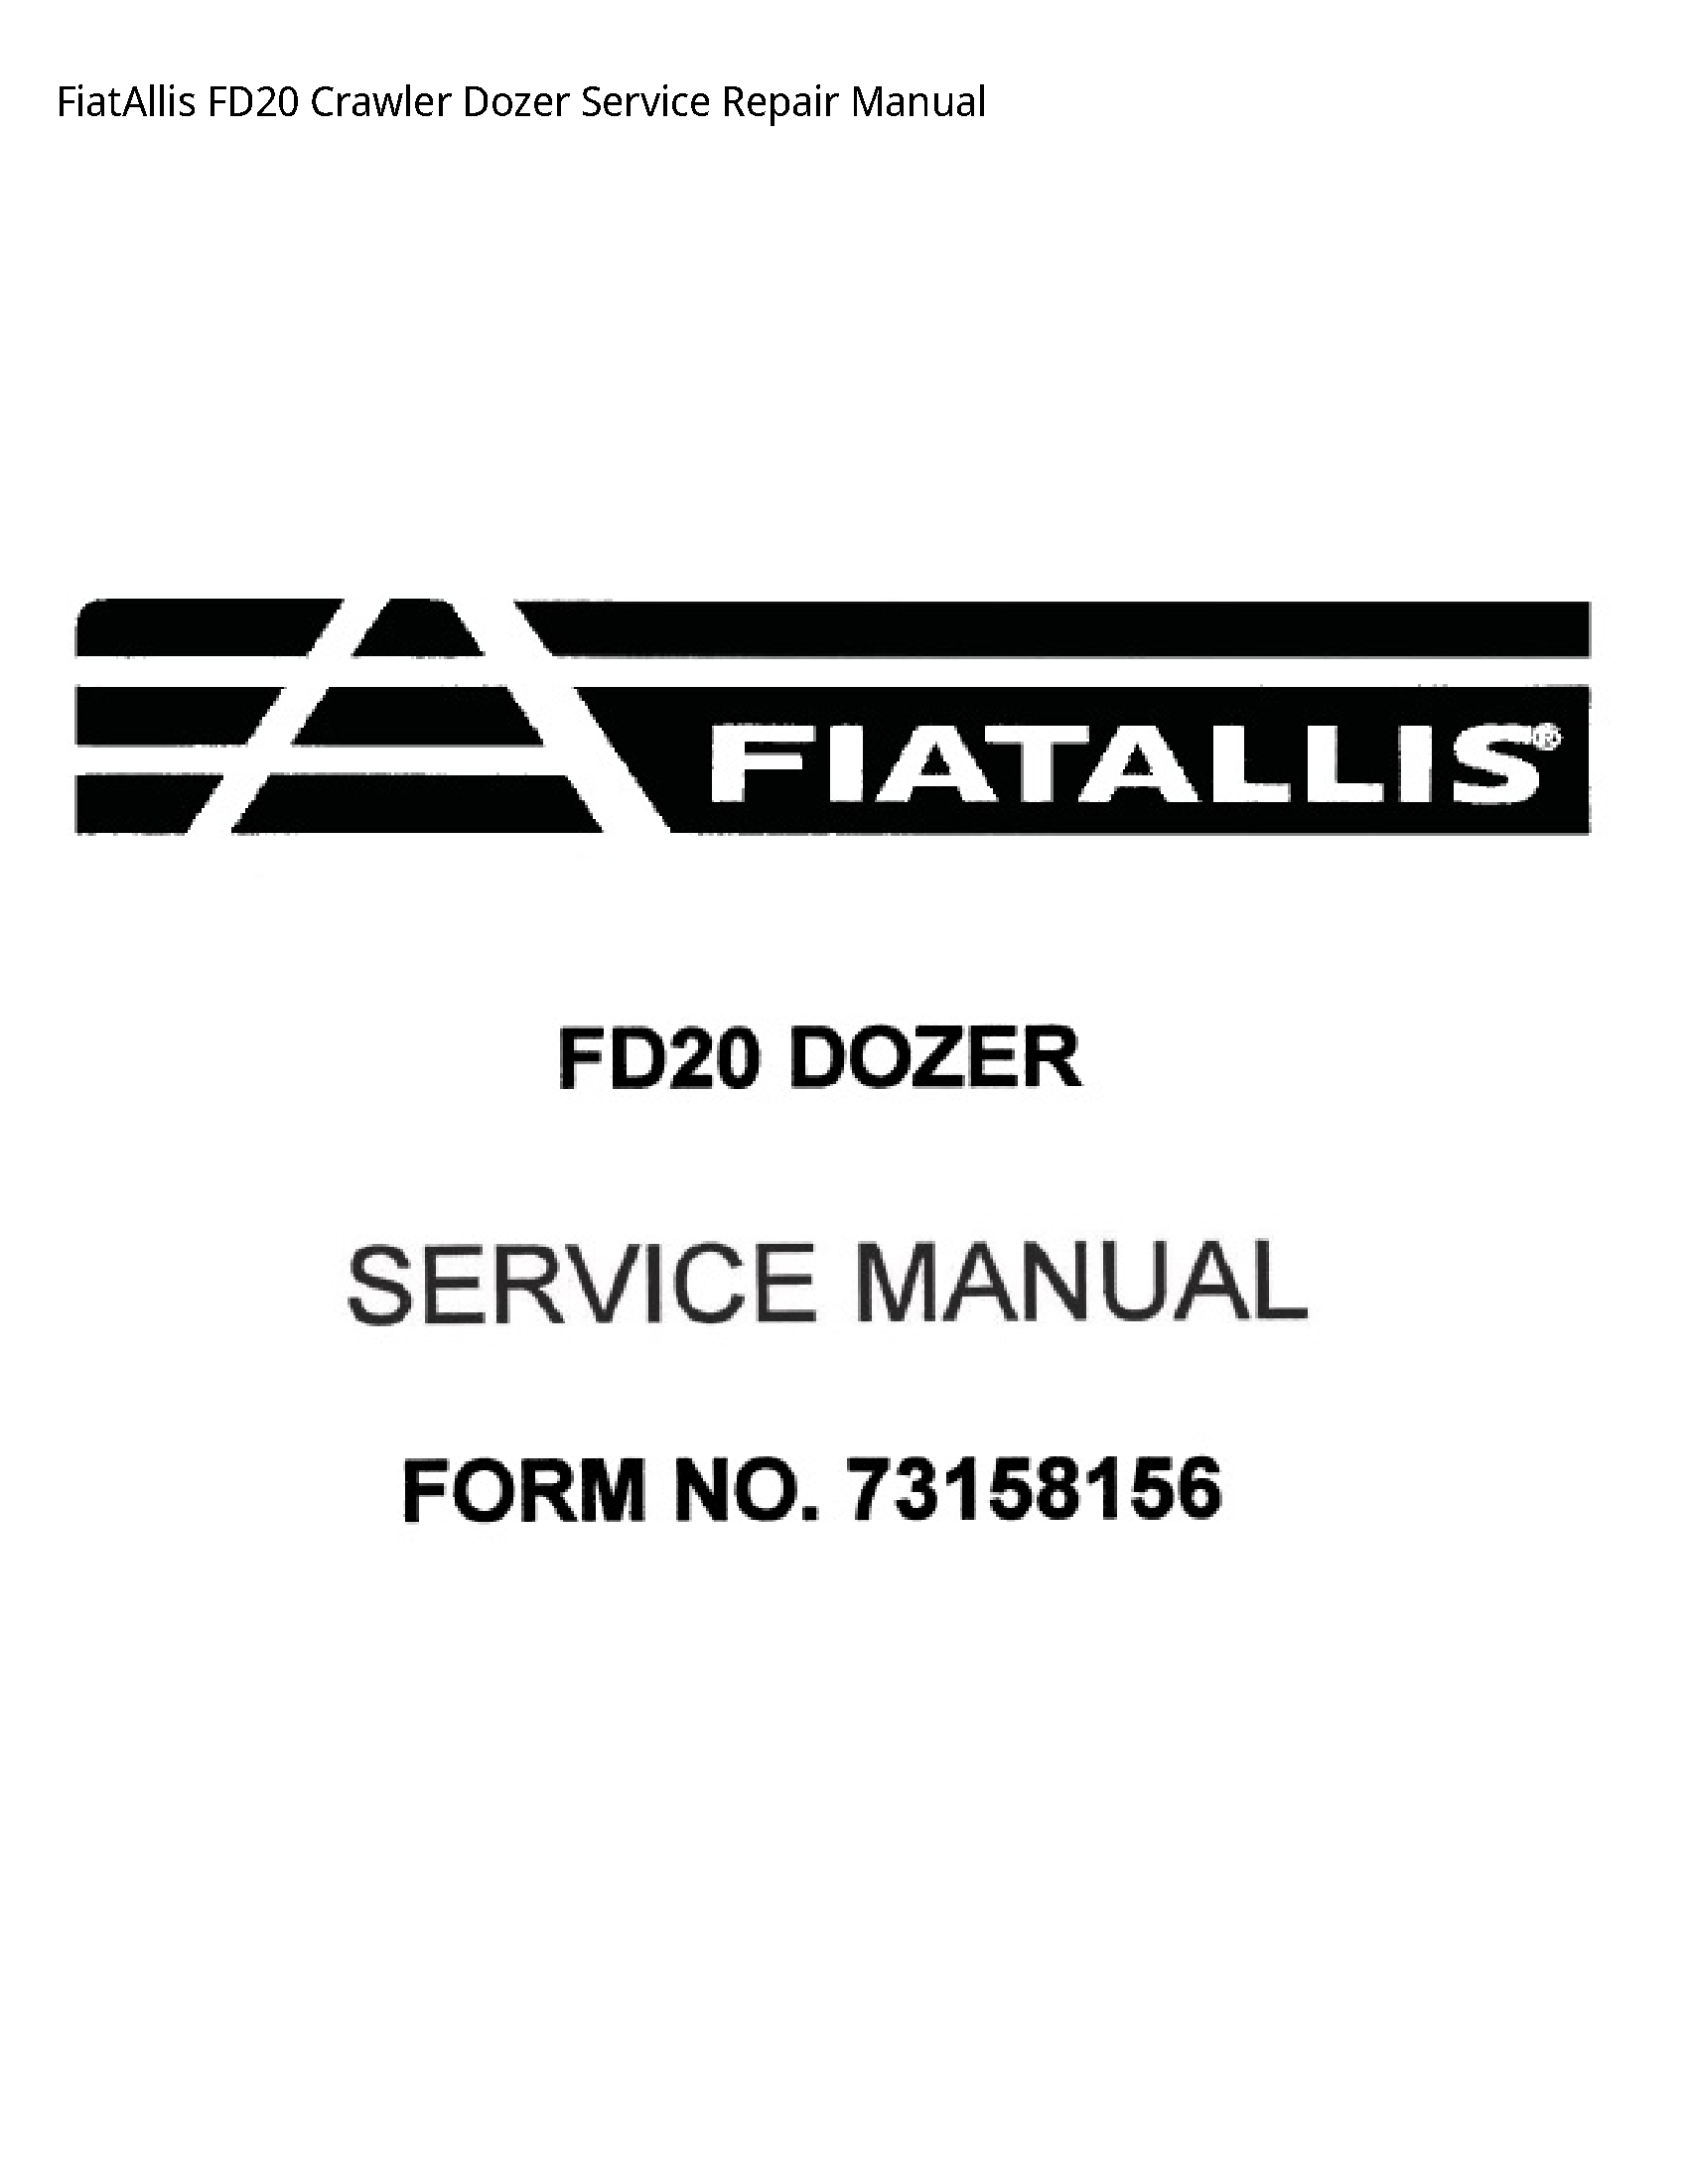 Fiatallis FD20 Crawler Dozer manual